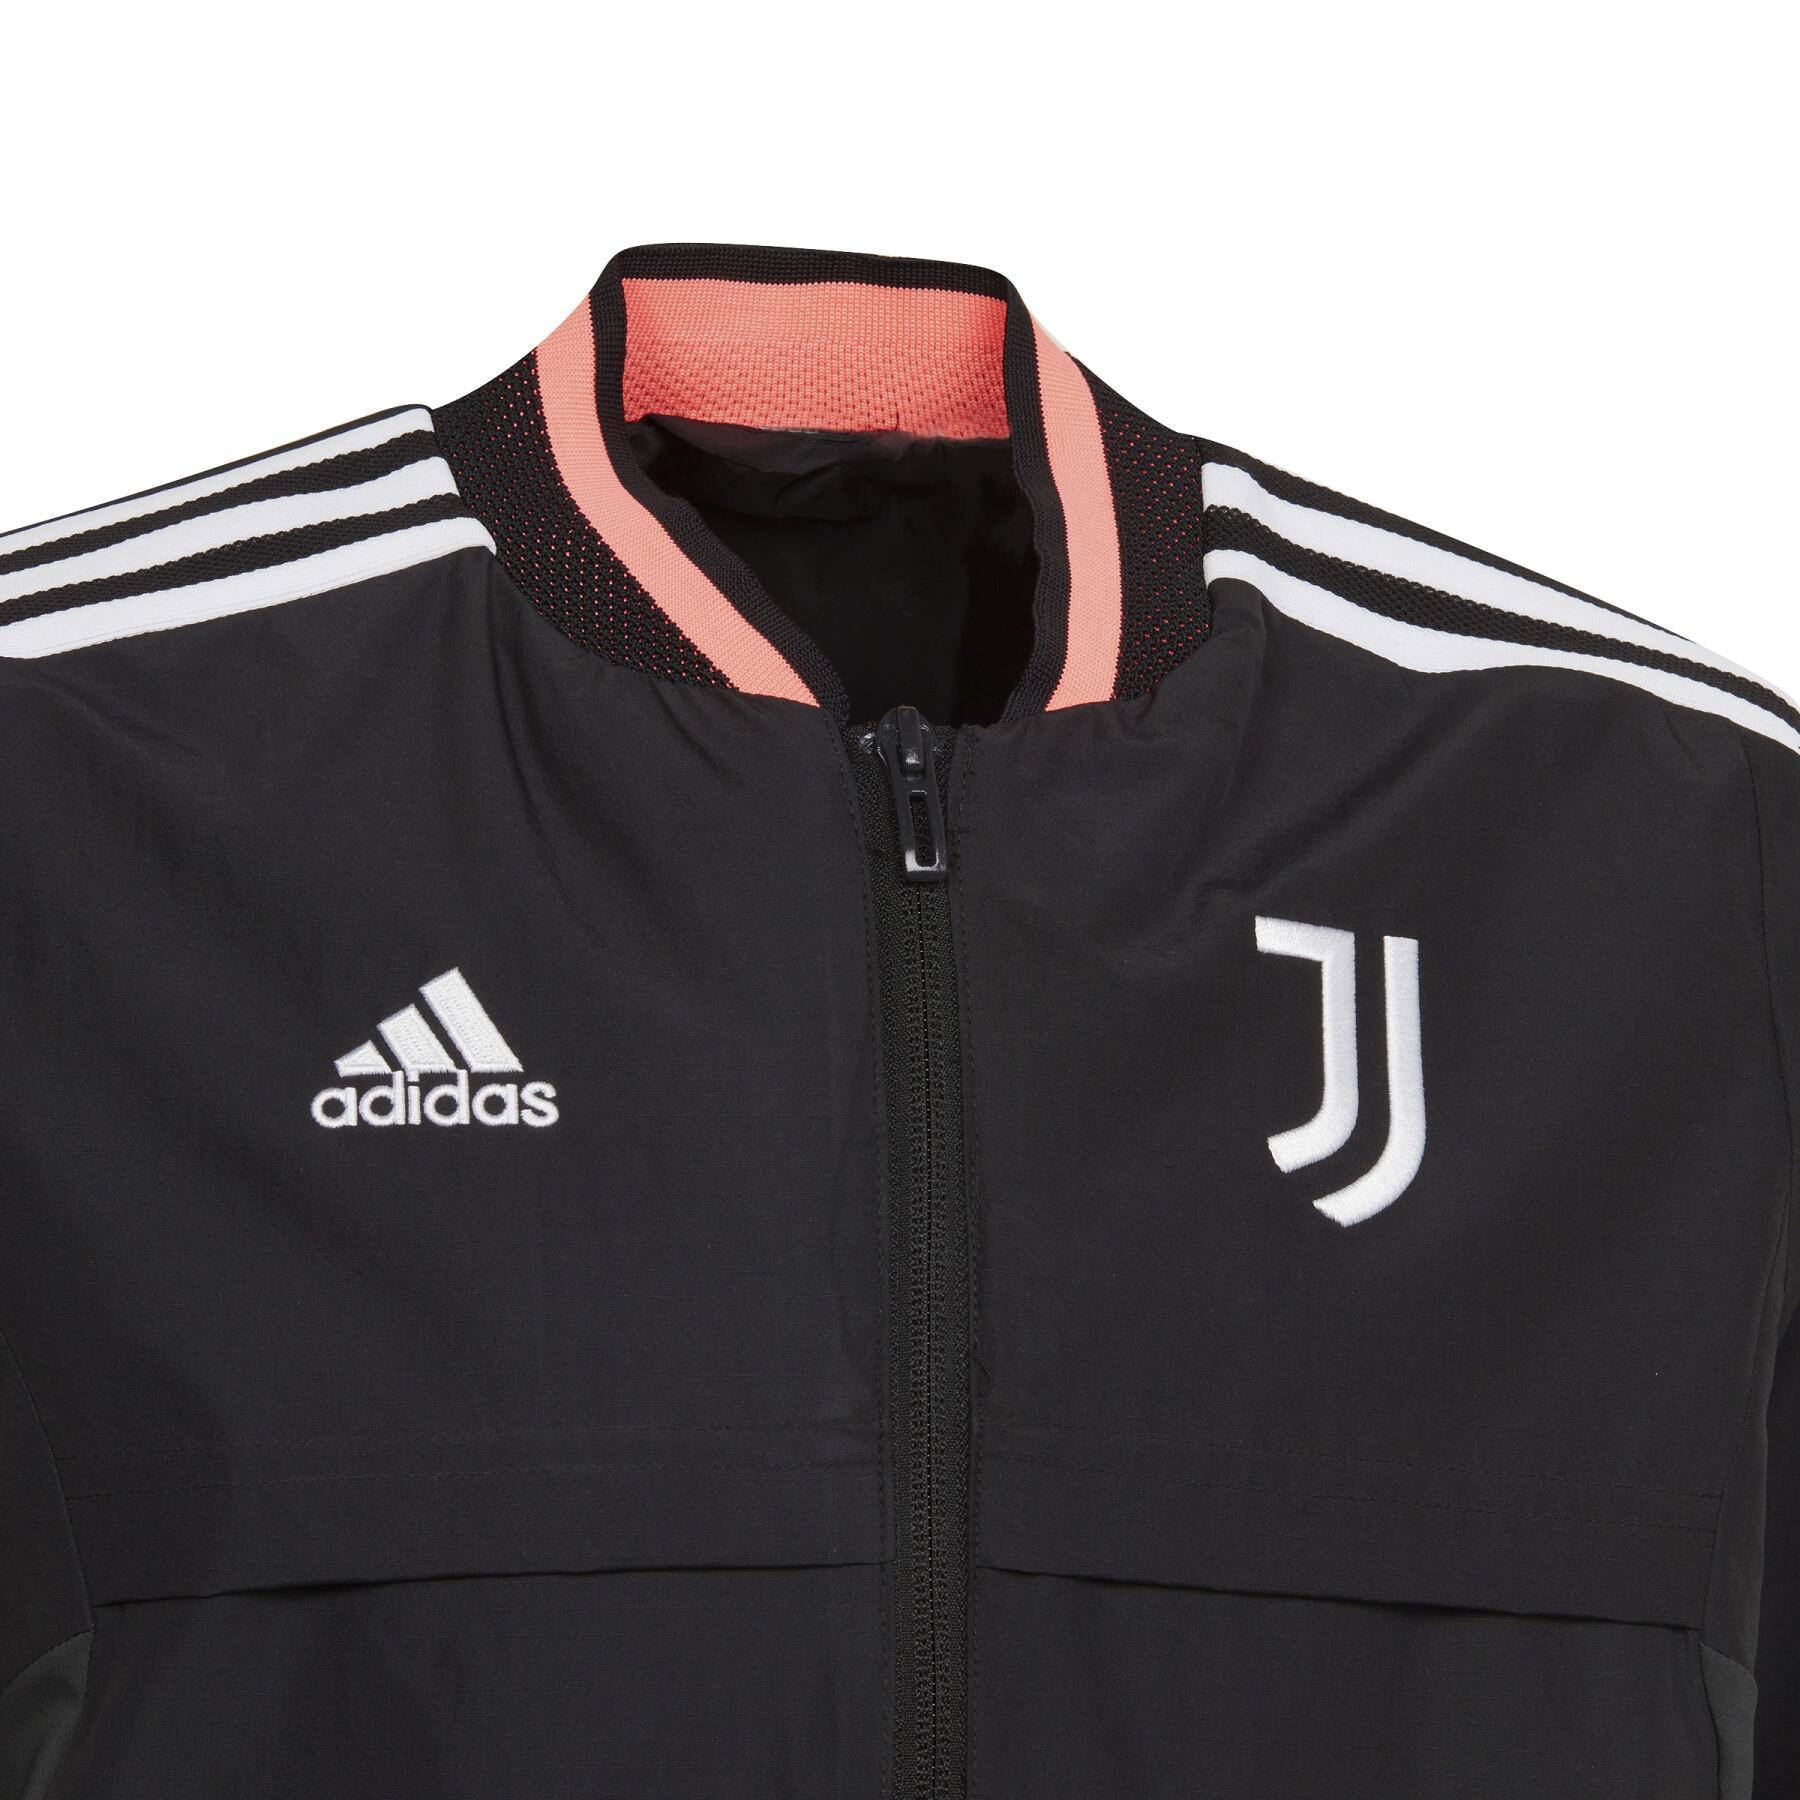 Children's tracksuit jacket Juventus Turin Condivo Antem 2022/23